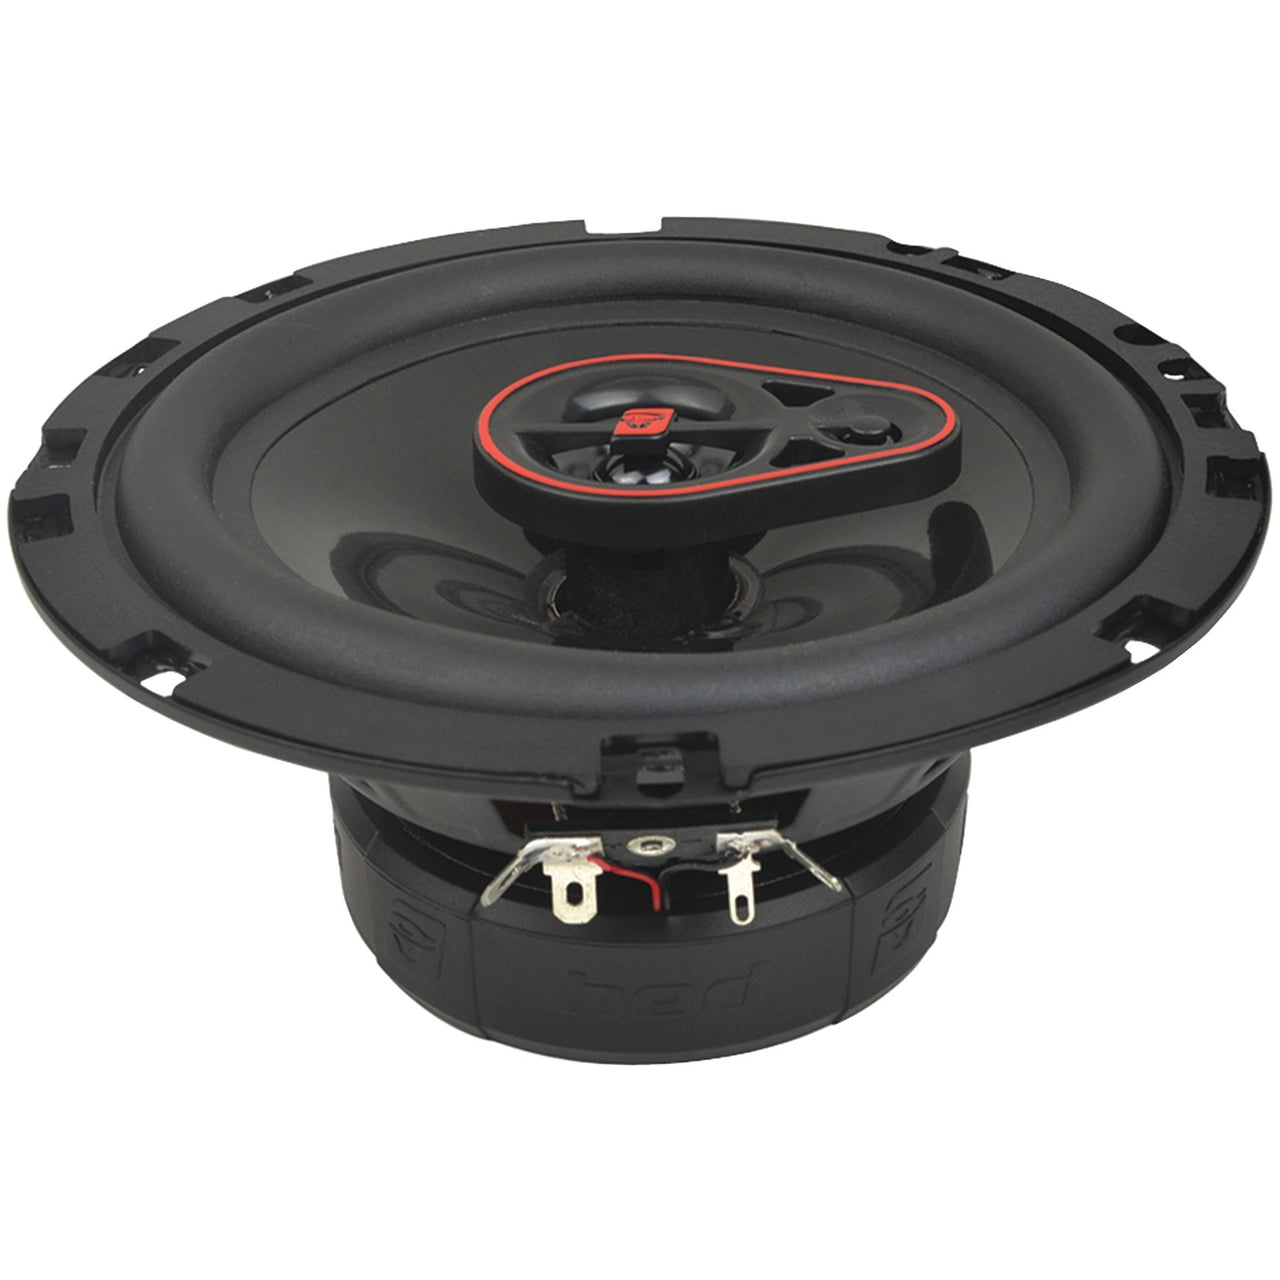 2 Pair CERWIN-VEGA 3-Way Coaxial Speakers (6.5", 340 Watts max) + Harness For Honda